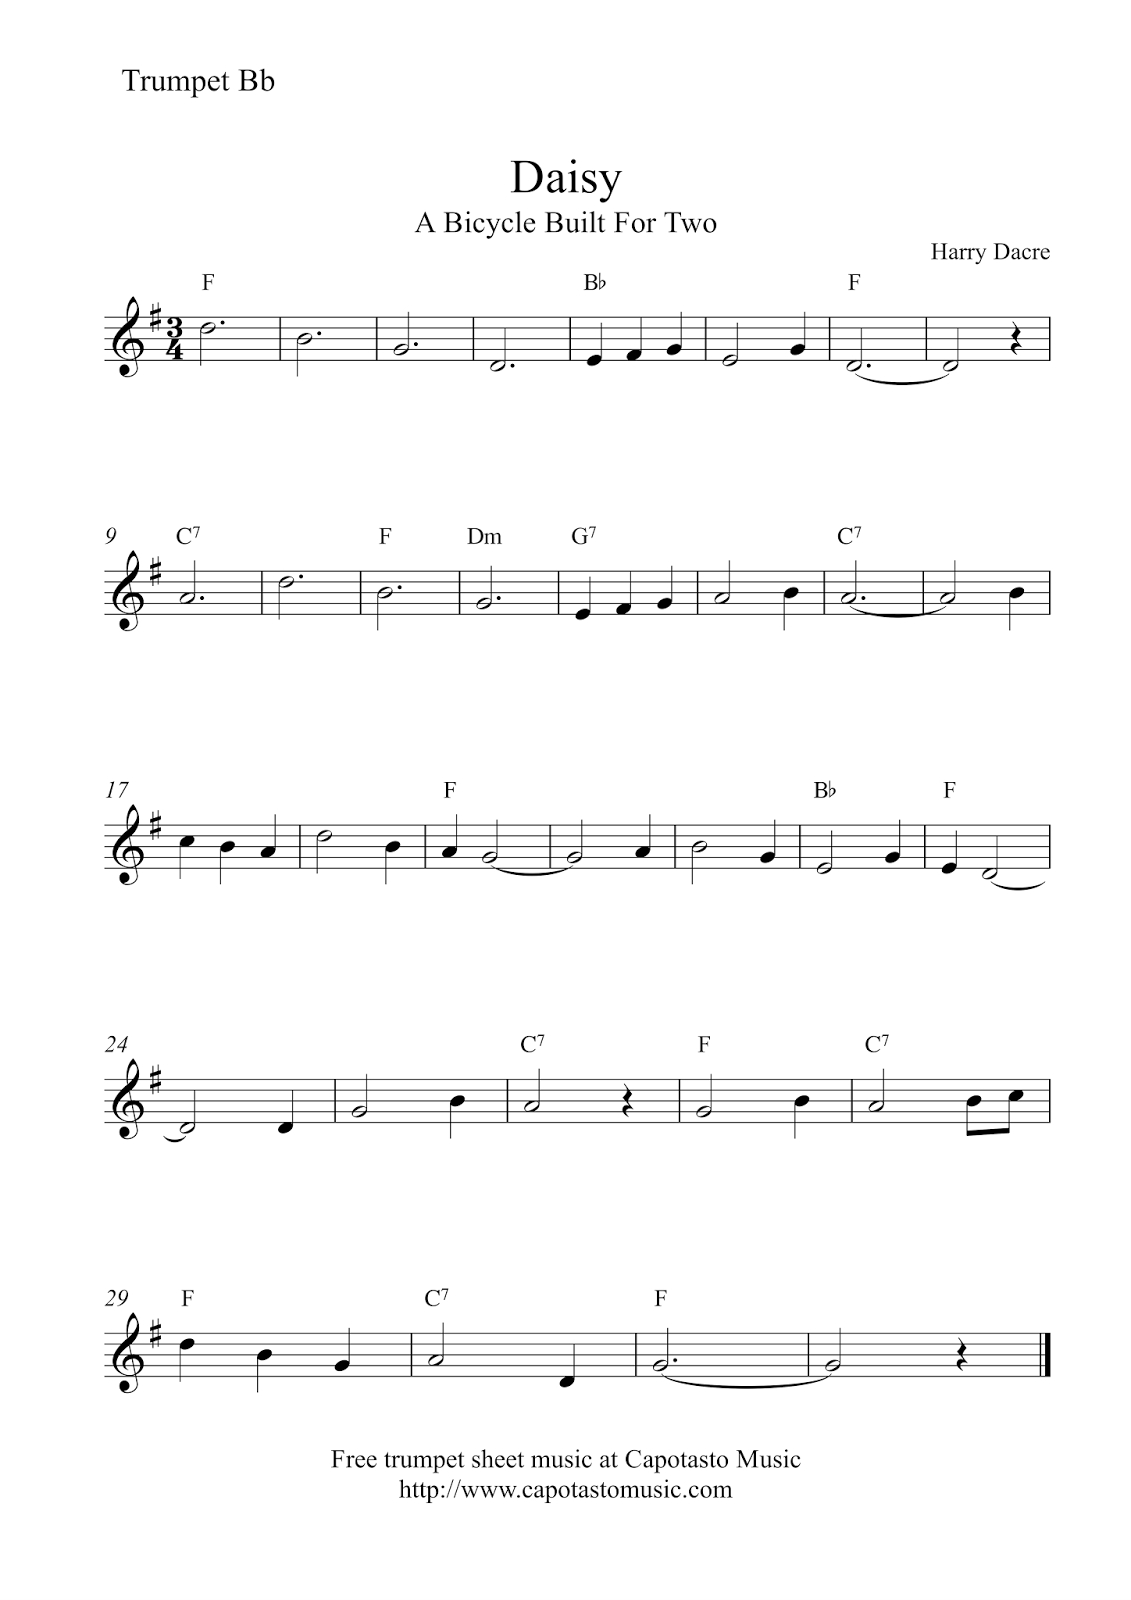 Free Printable Sheet Music For Trumpet Free Printable